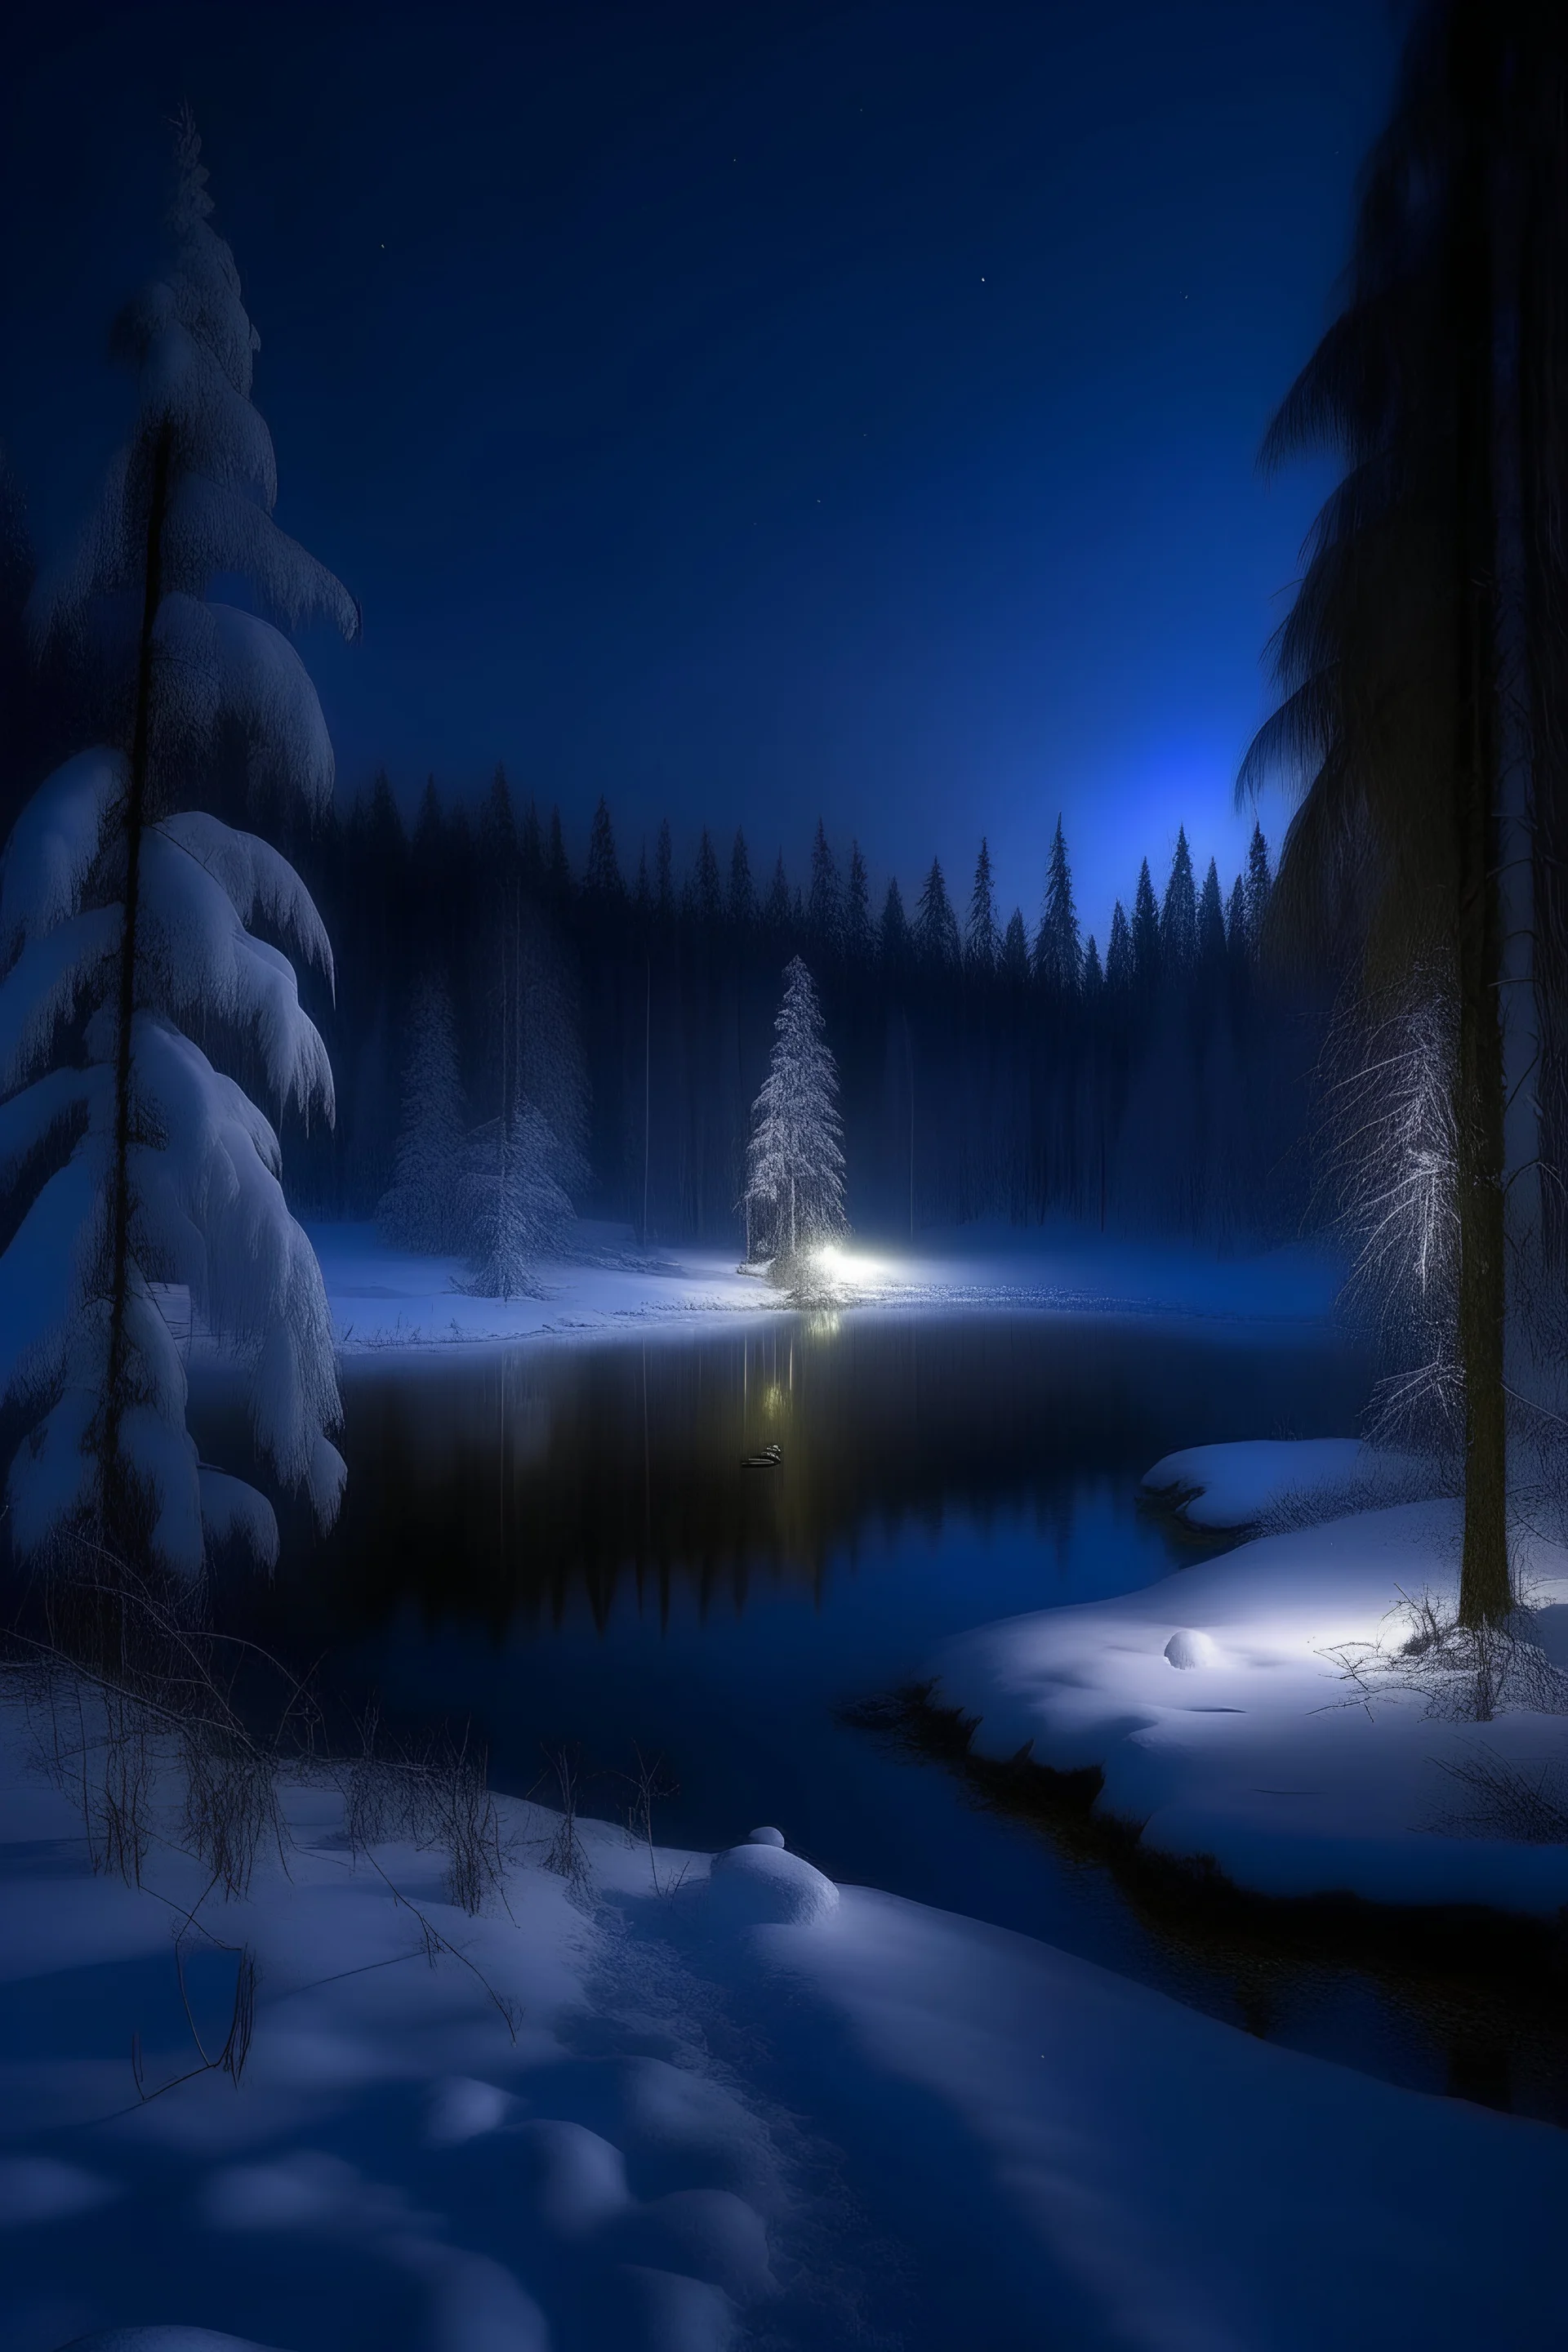 Winter Night photo & image  landscape, nature at night, nature